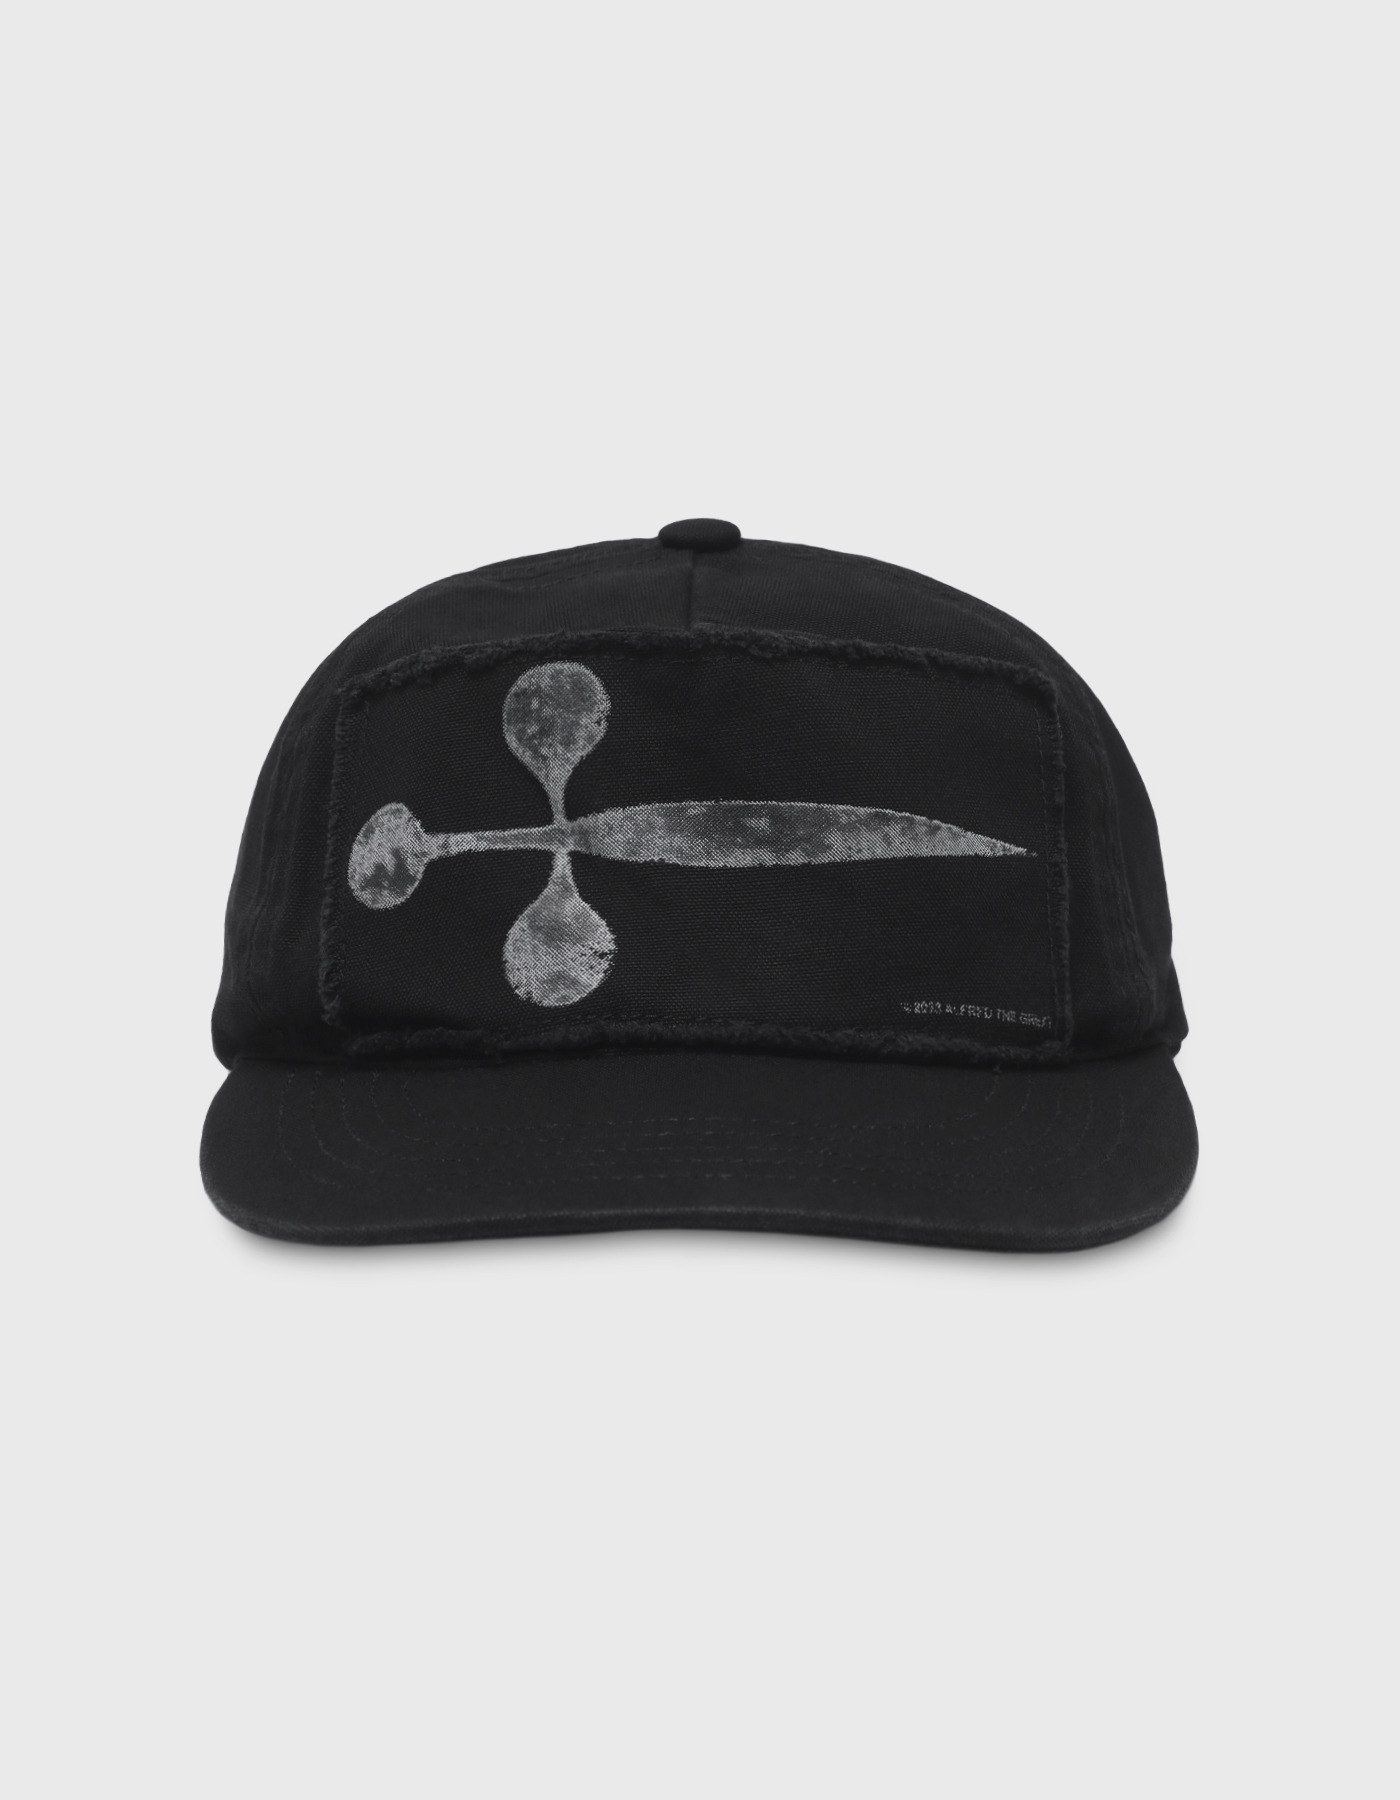 FRED SWORD CAP / Black